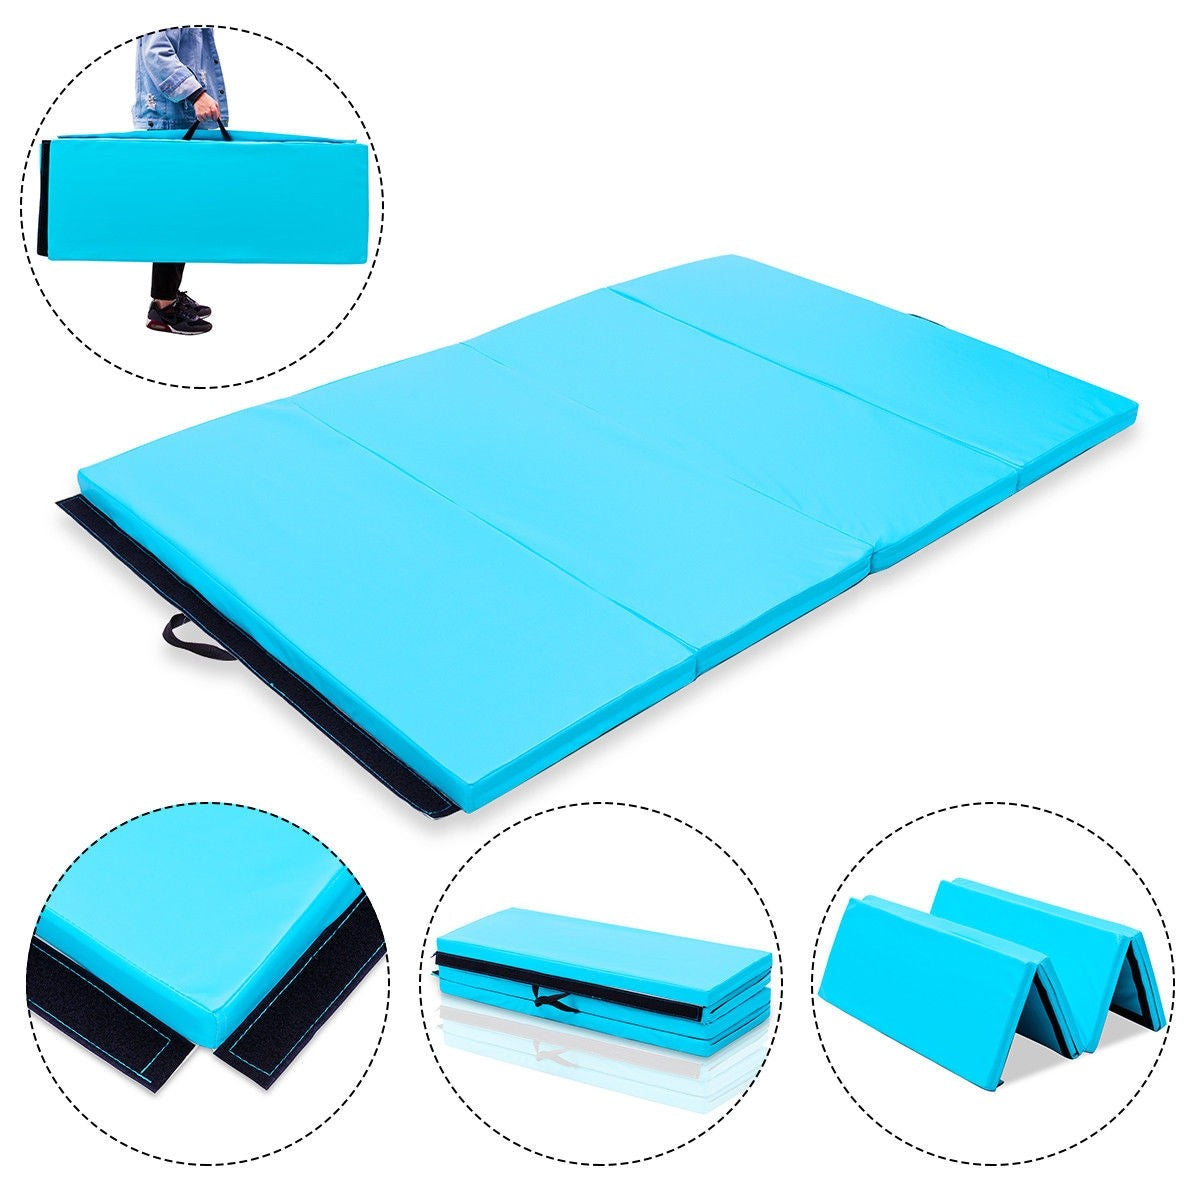 Giantex 6 ft x 4 ft Gymnastics Mat, Folding Anti-Tear Exercise Floor Mats W/Handles (Light Blue) - Giantexus